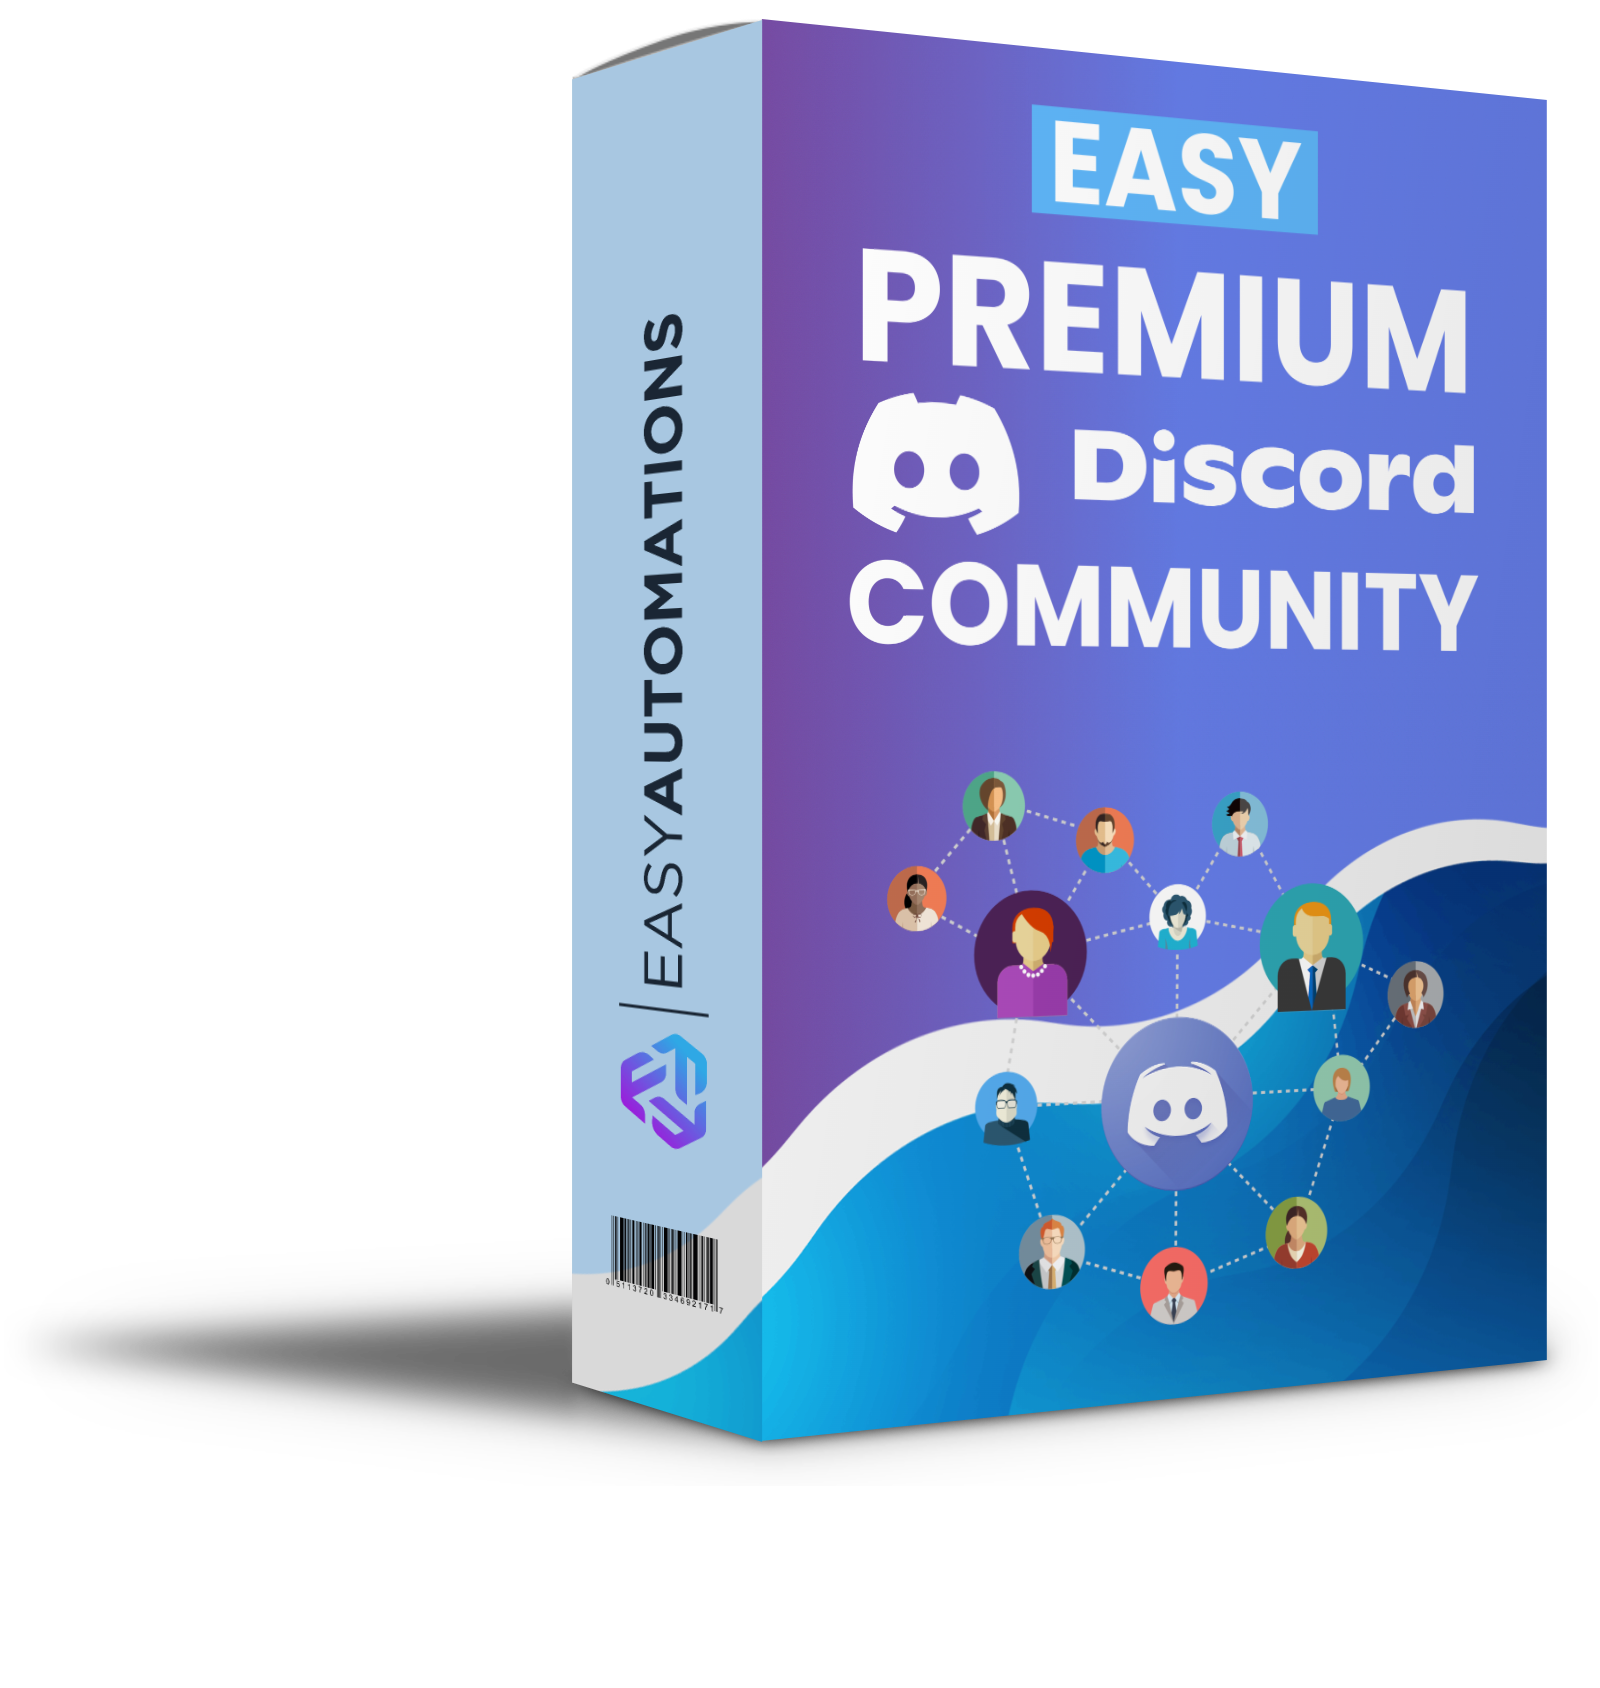 Easy Premium Discord Community